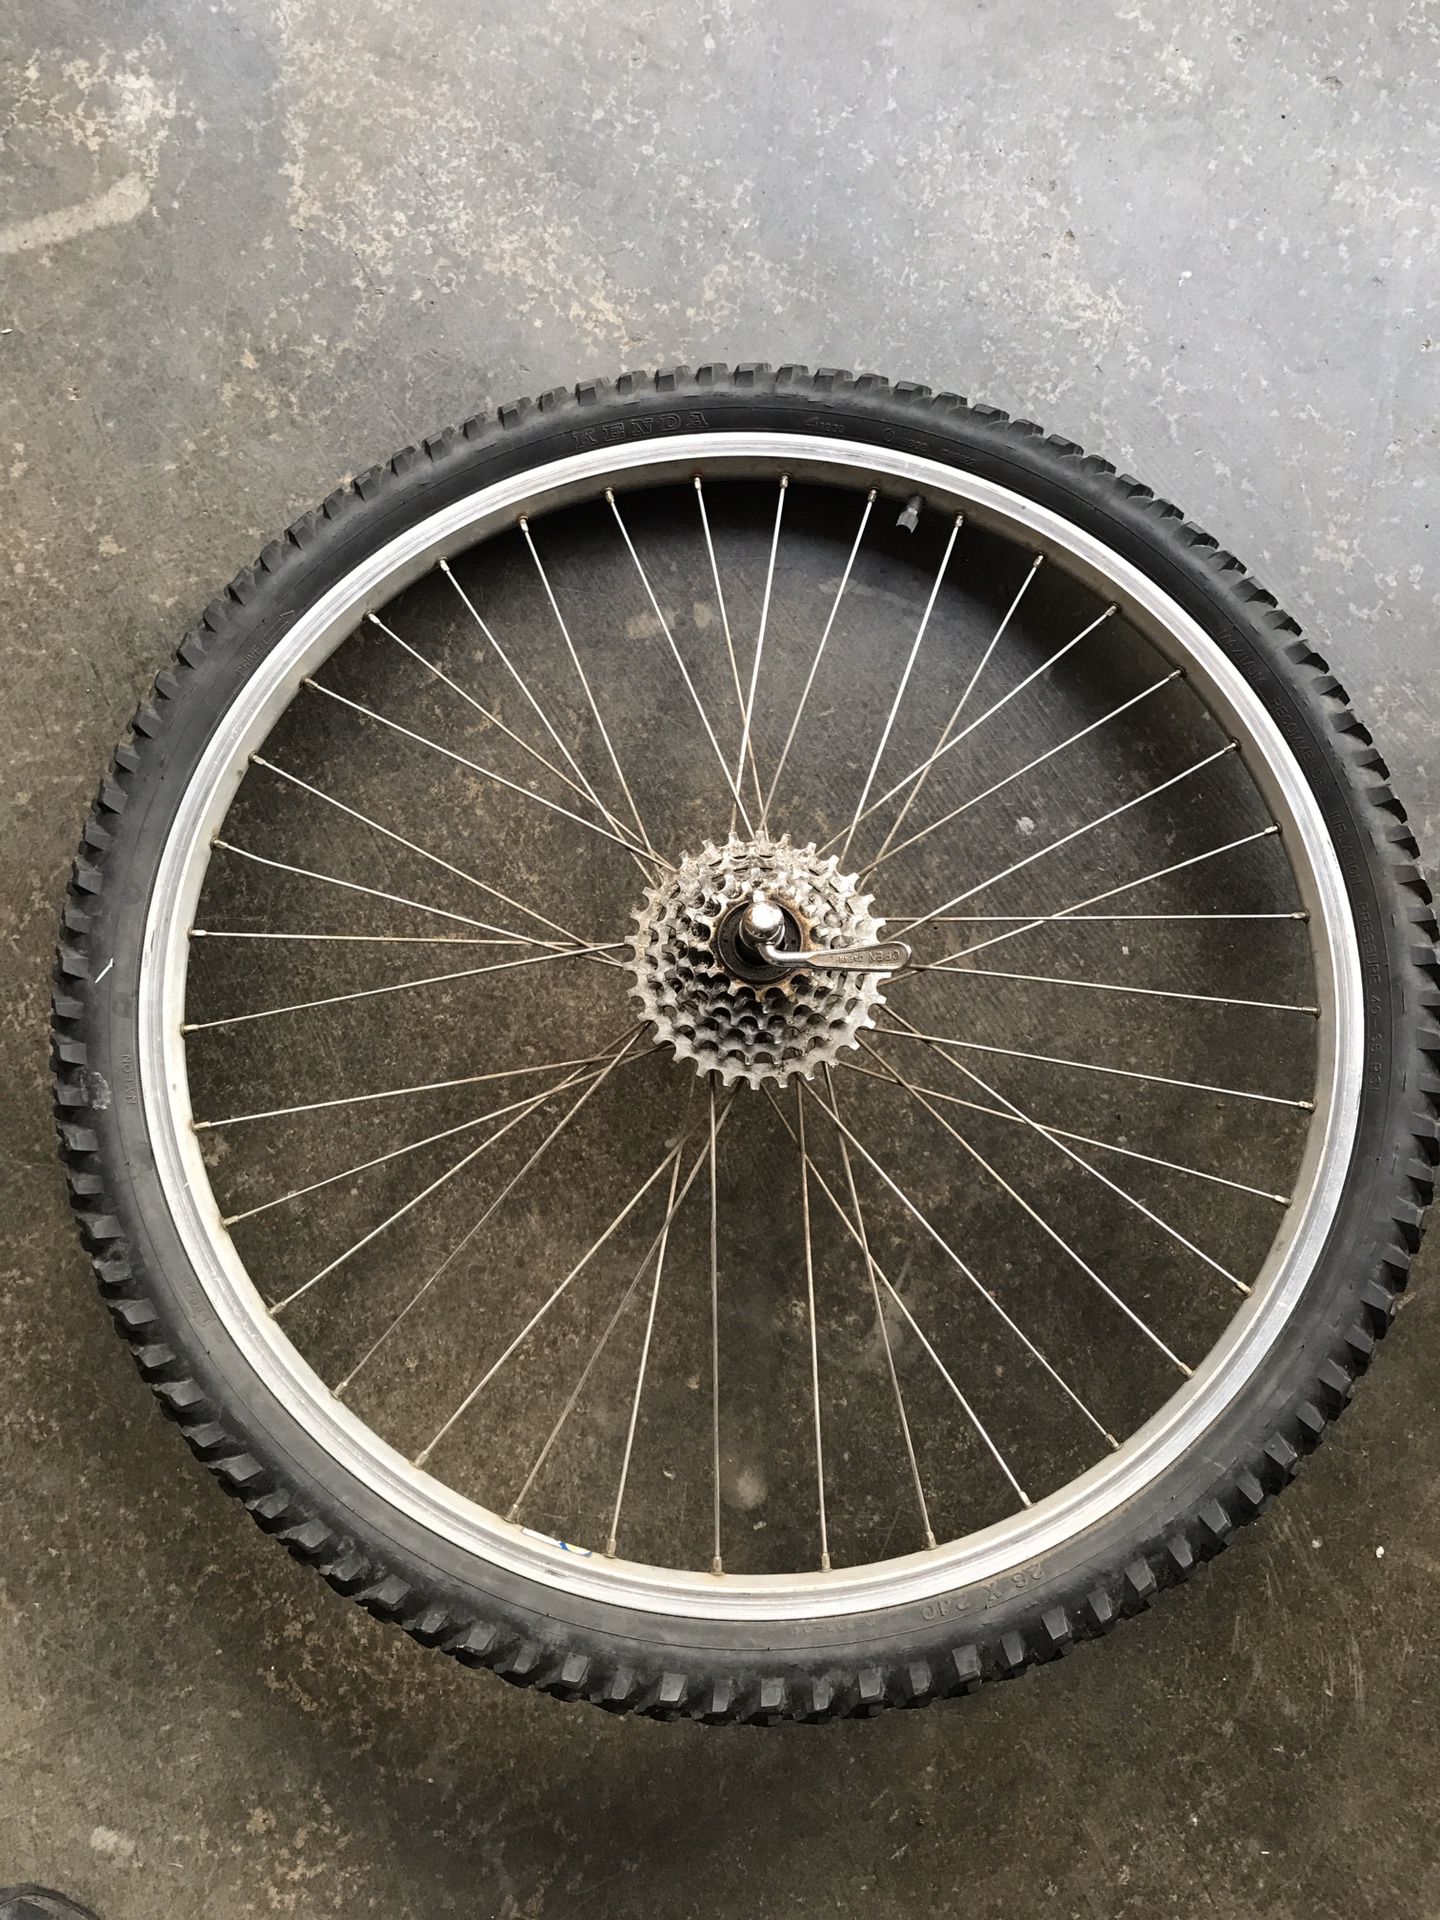 26” Kenda Bike wheel